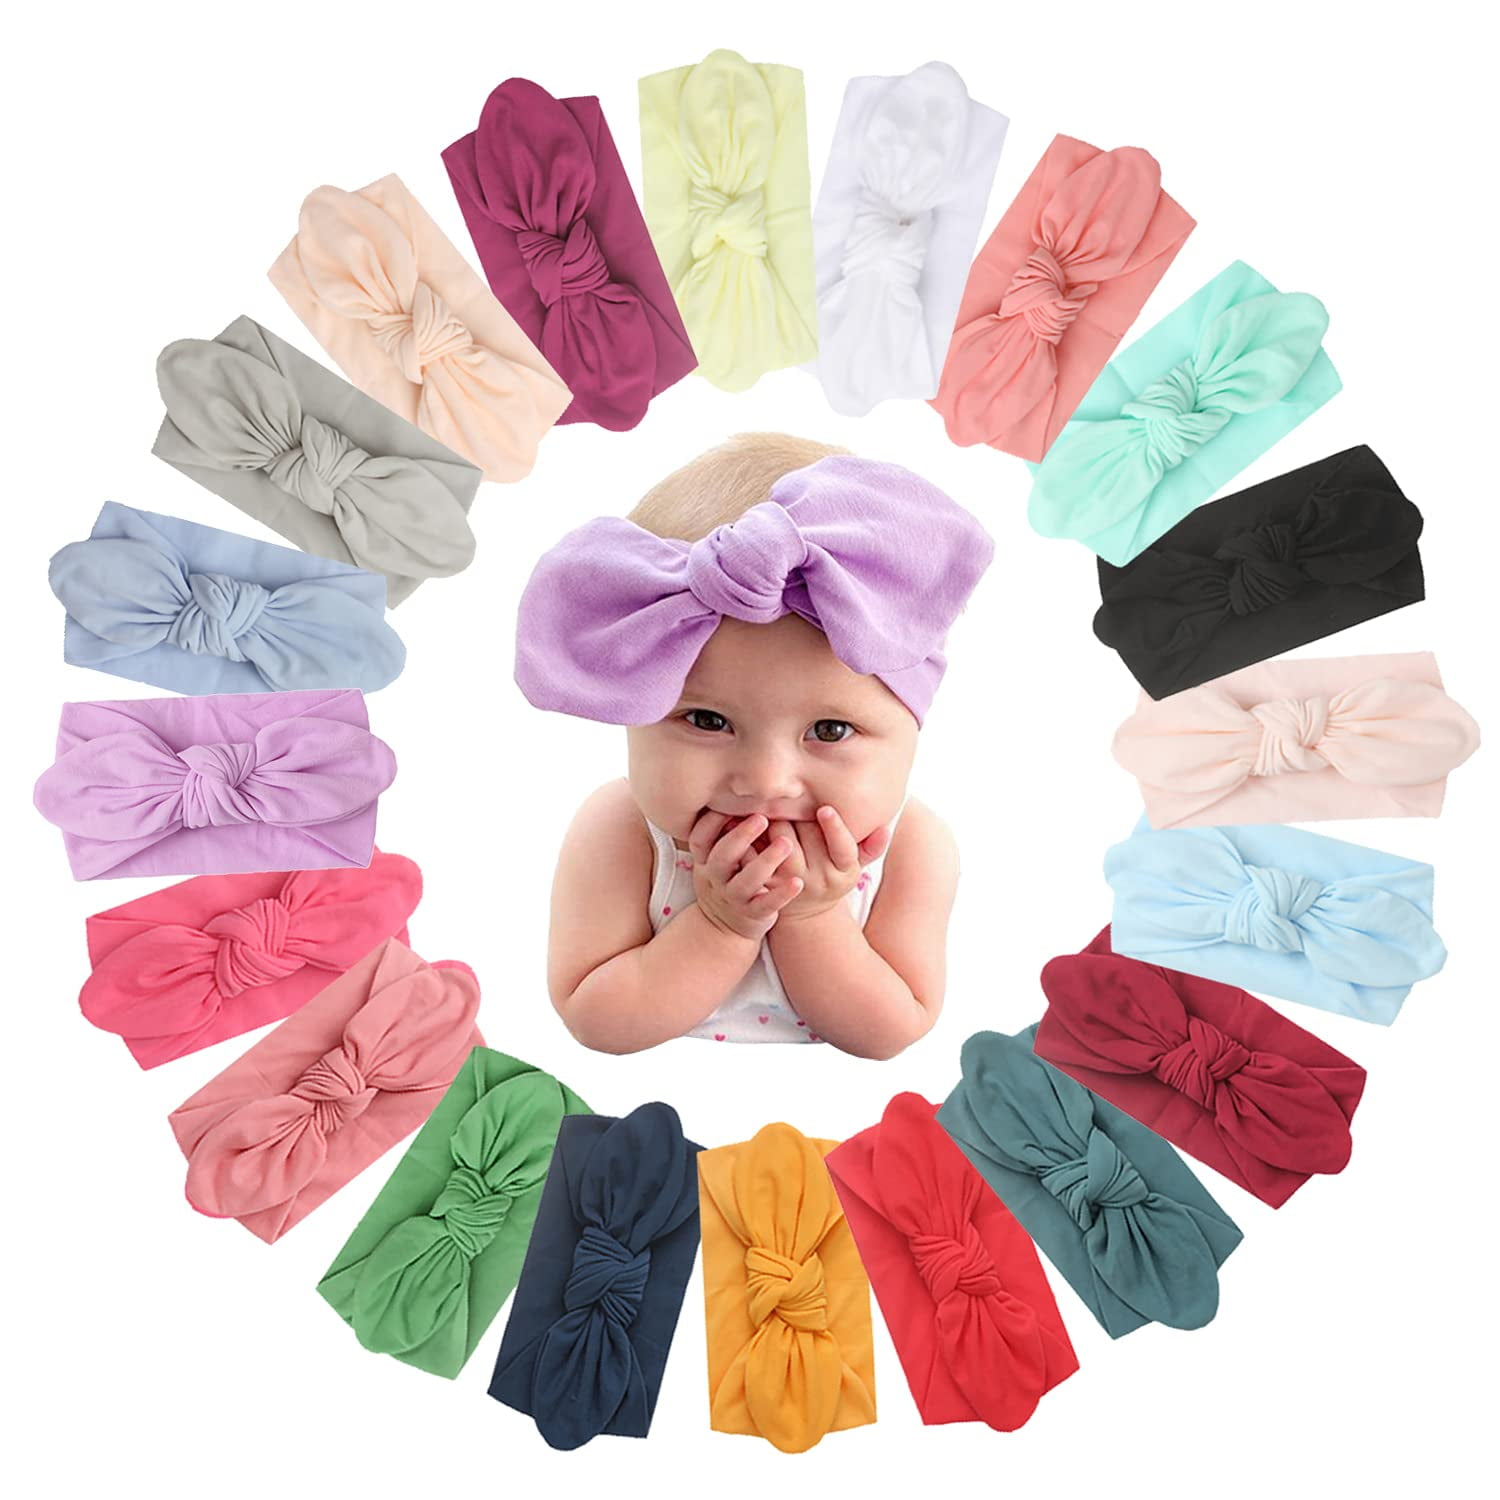 WZT 20pcs Baby Nylon Girls Headbands Turban Hair Bows Hair Band Elastic Hair  Accessories for Kids Toddlers Infants Newborn 